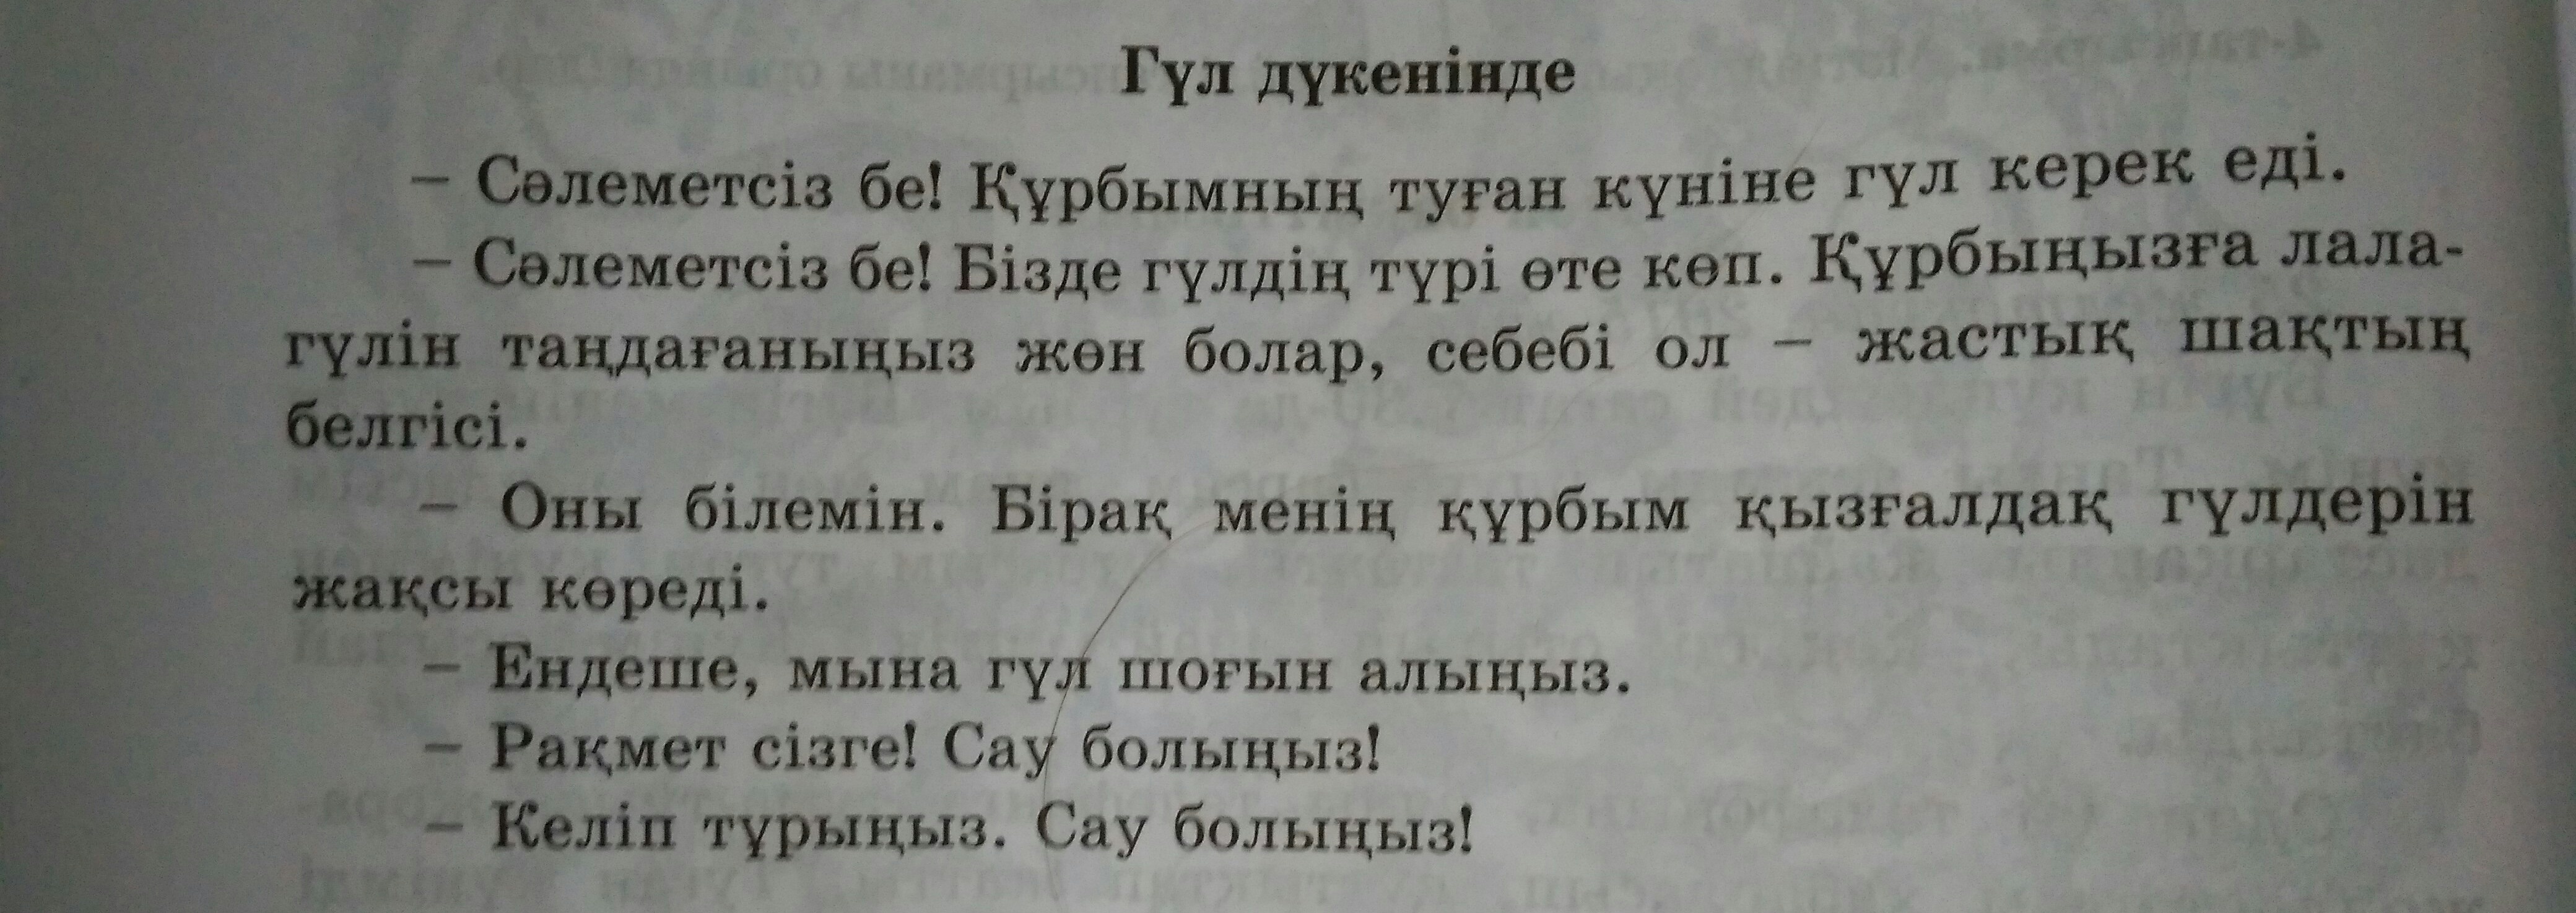 Английский перевод на казахский фото